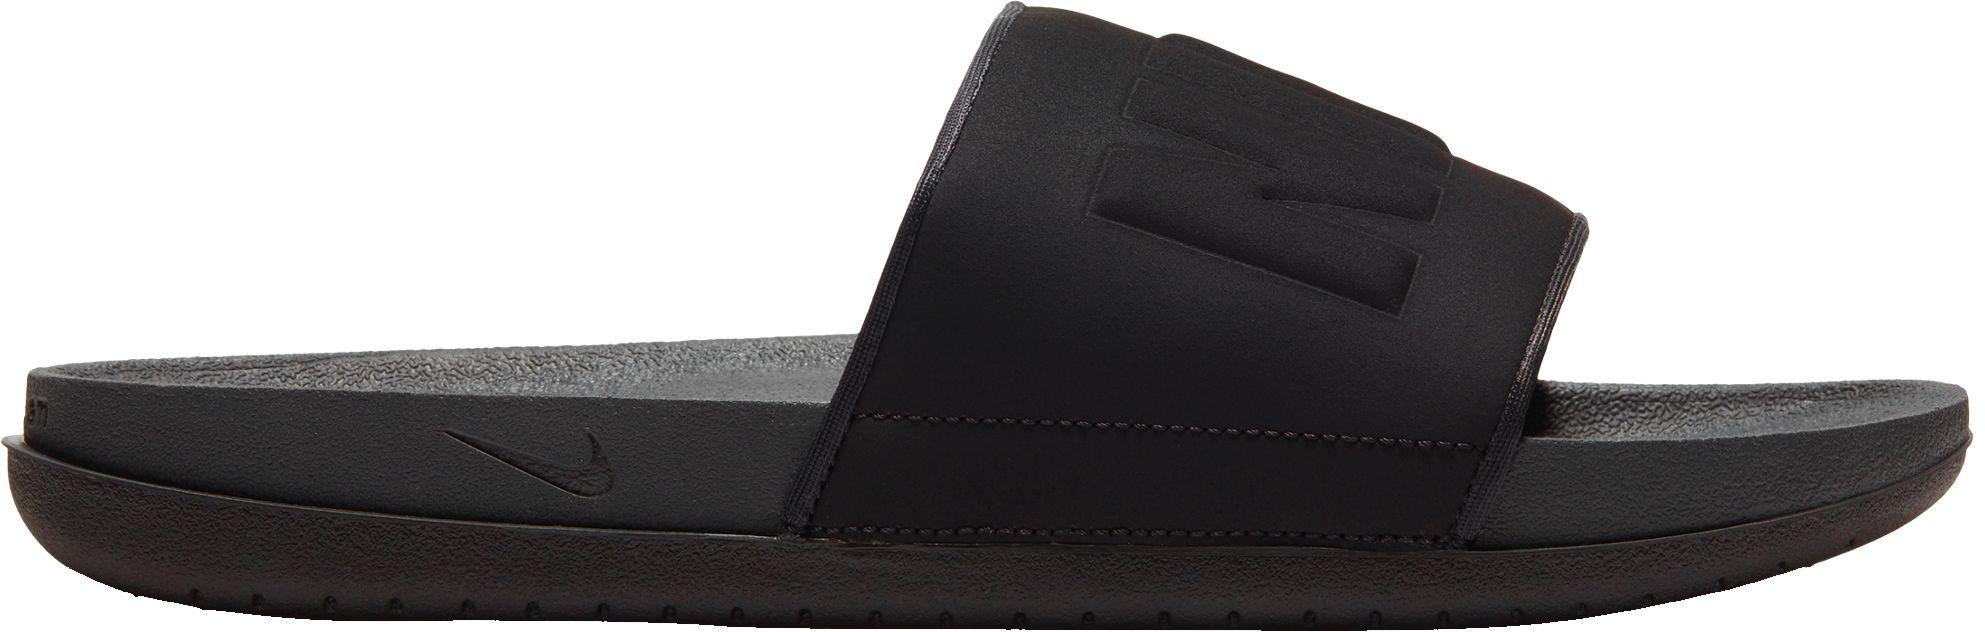 Nike Offcourt Slide (anthracite) in Anthracite/Black (Black) for Men ...